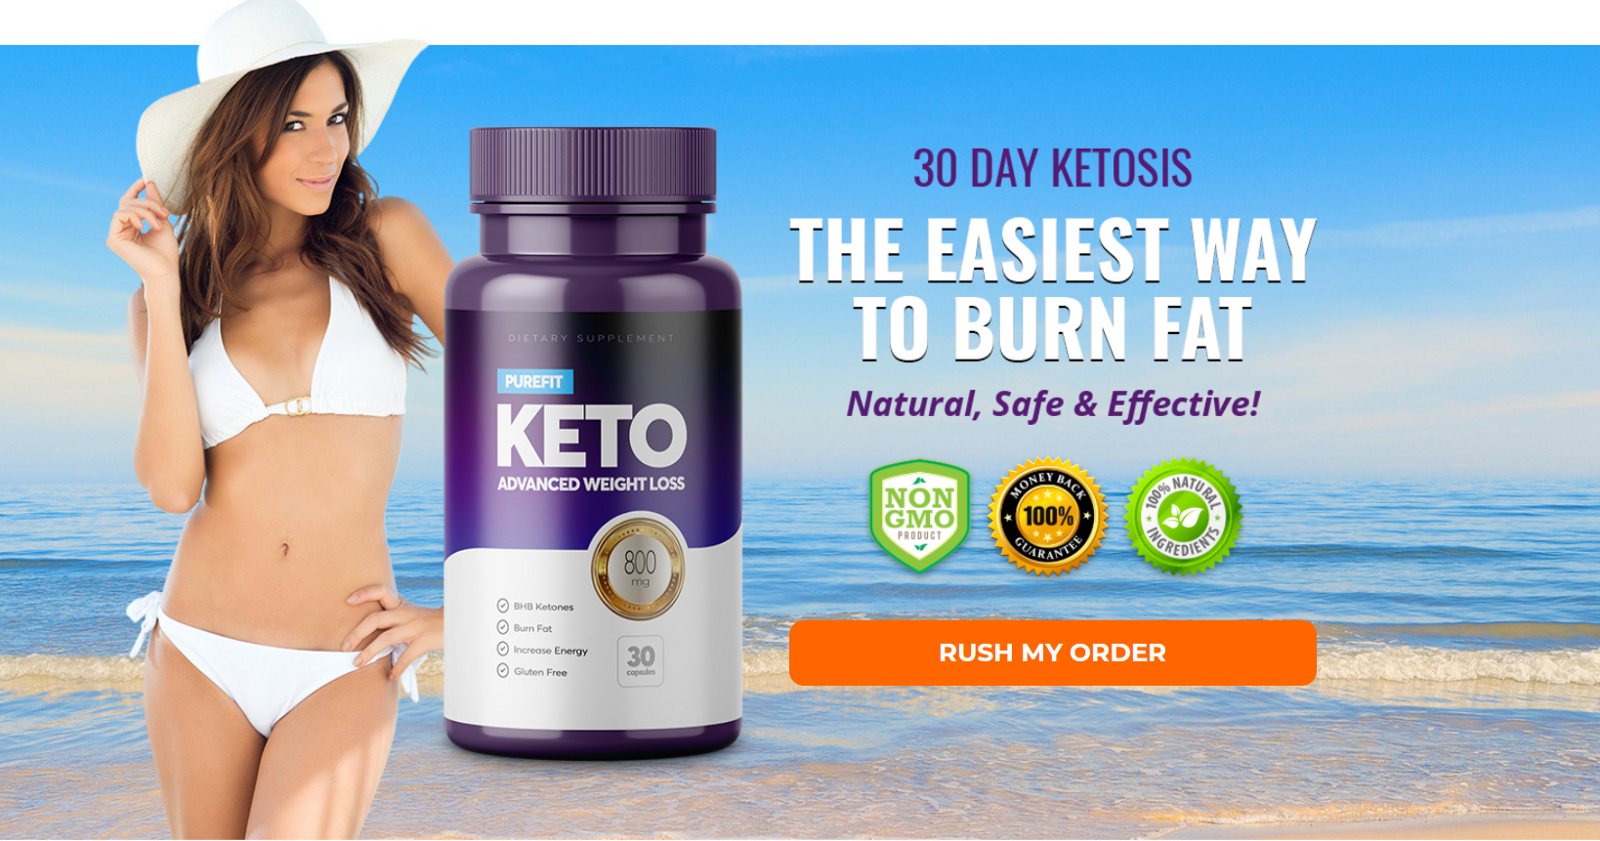 Buy Purefit keto online now.